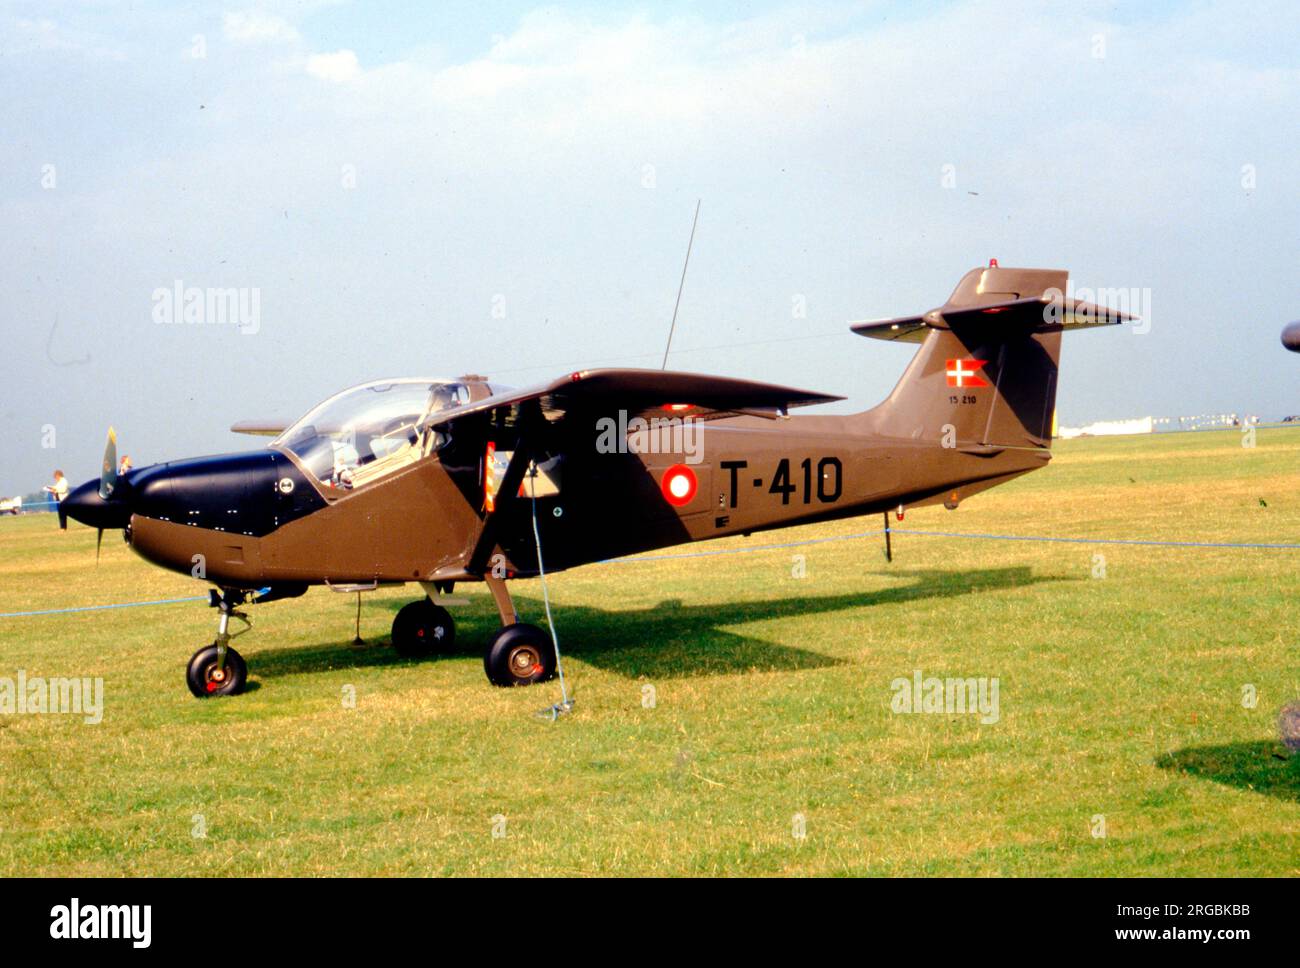 Flyvevabnet - Saab MFI-17 Supporter T-410 (msn 15-210), am 13. Juli 1986 in Middle Wallop. (Flyvevabnet - Royal Danish Air Force). Stockfoto